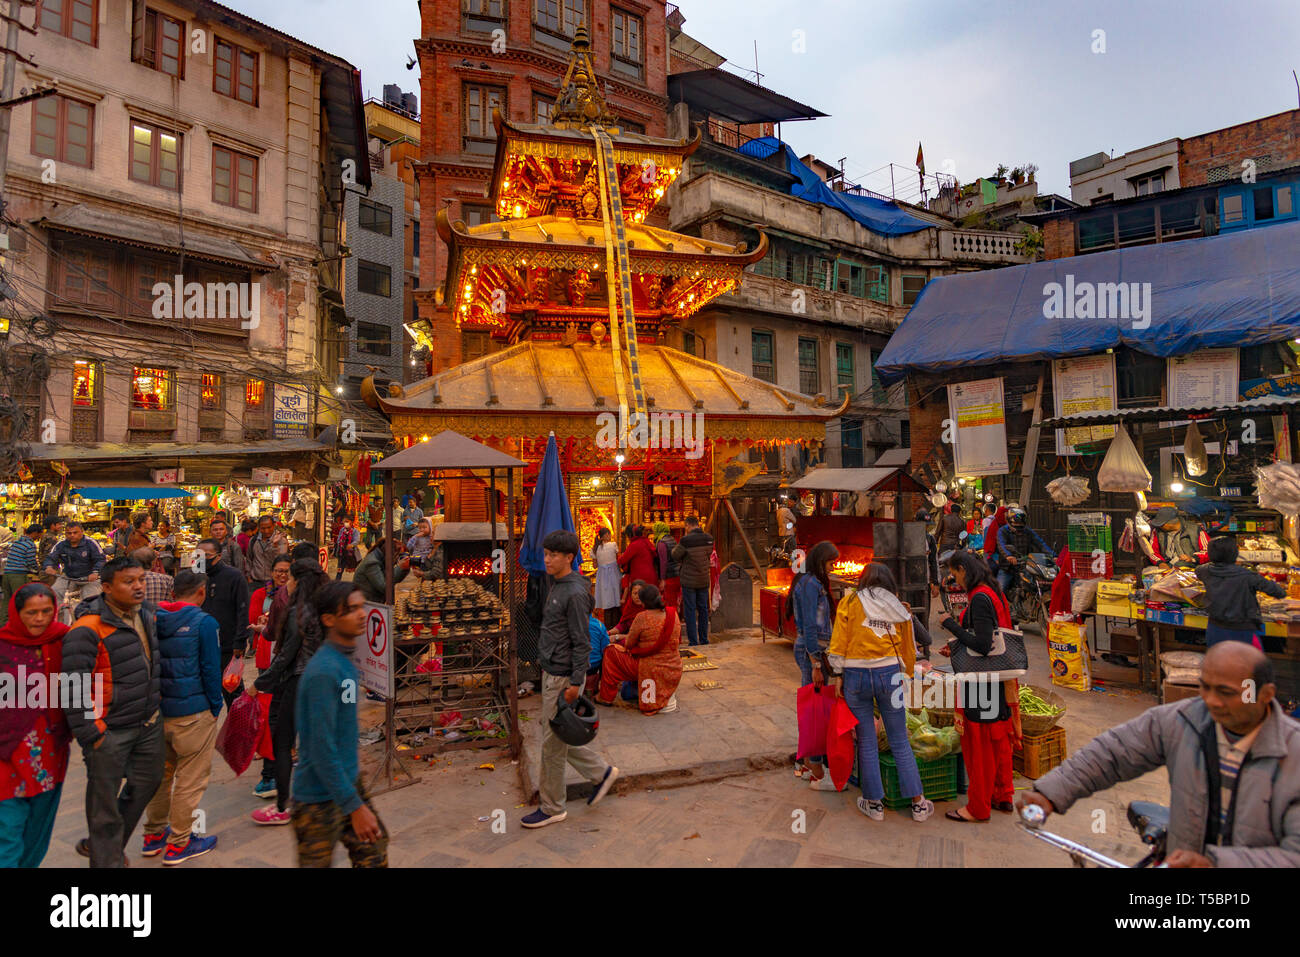 KATHMANDU, NEPAL - MARCH 30, 2019: Ganesh temple light by artificial lighting, taken during an evening market in the historical center of Kathmandu Stock Photo